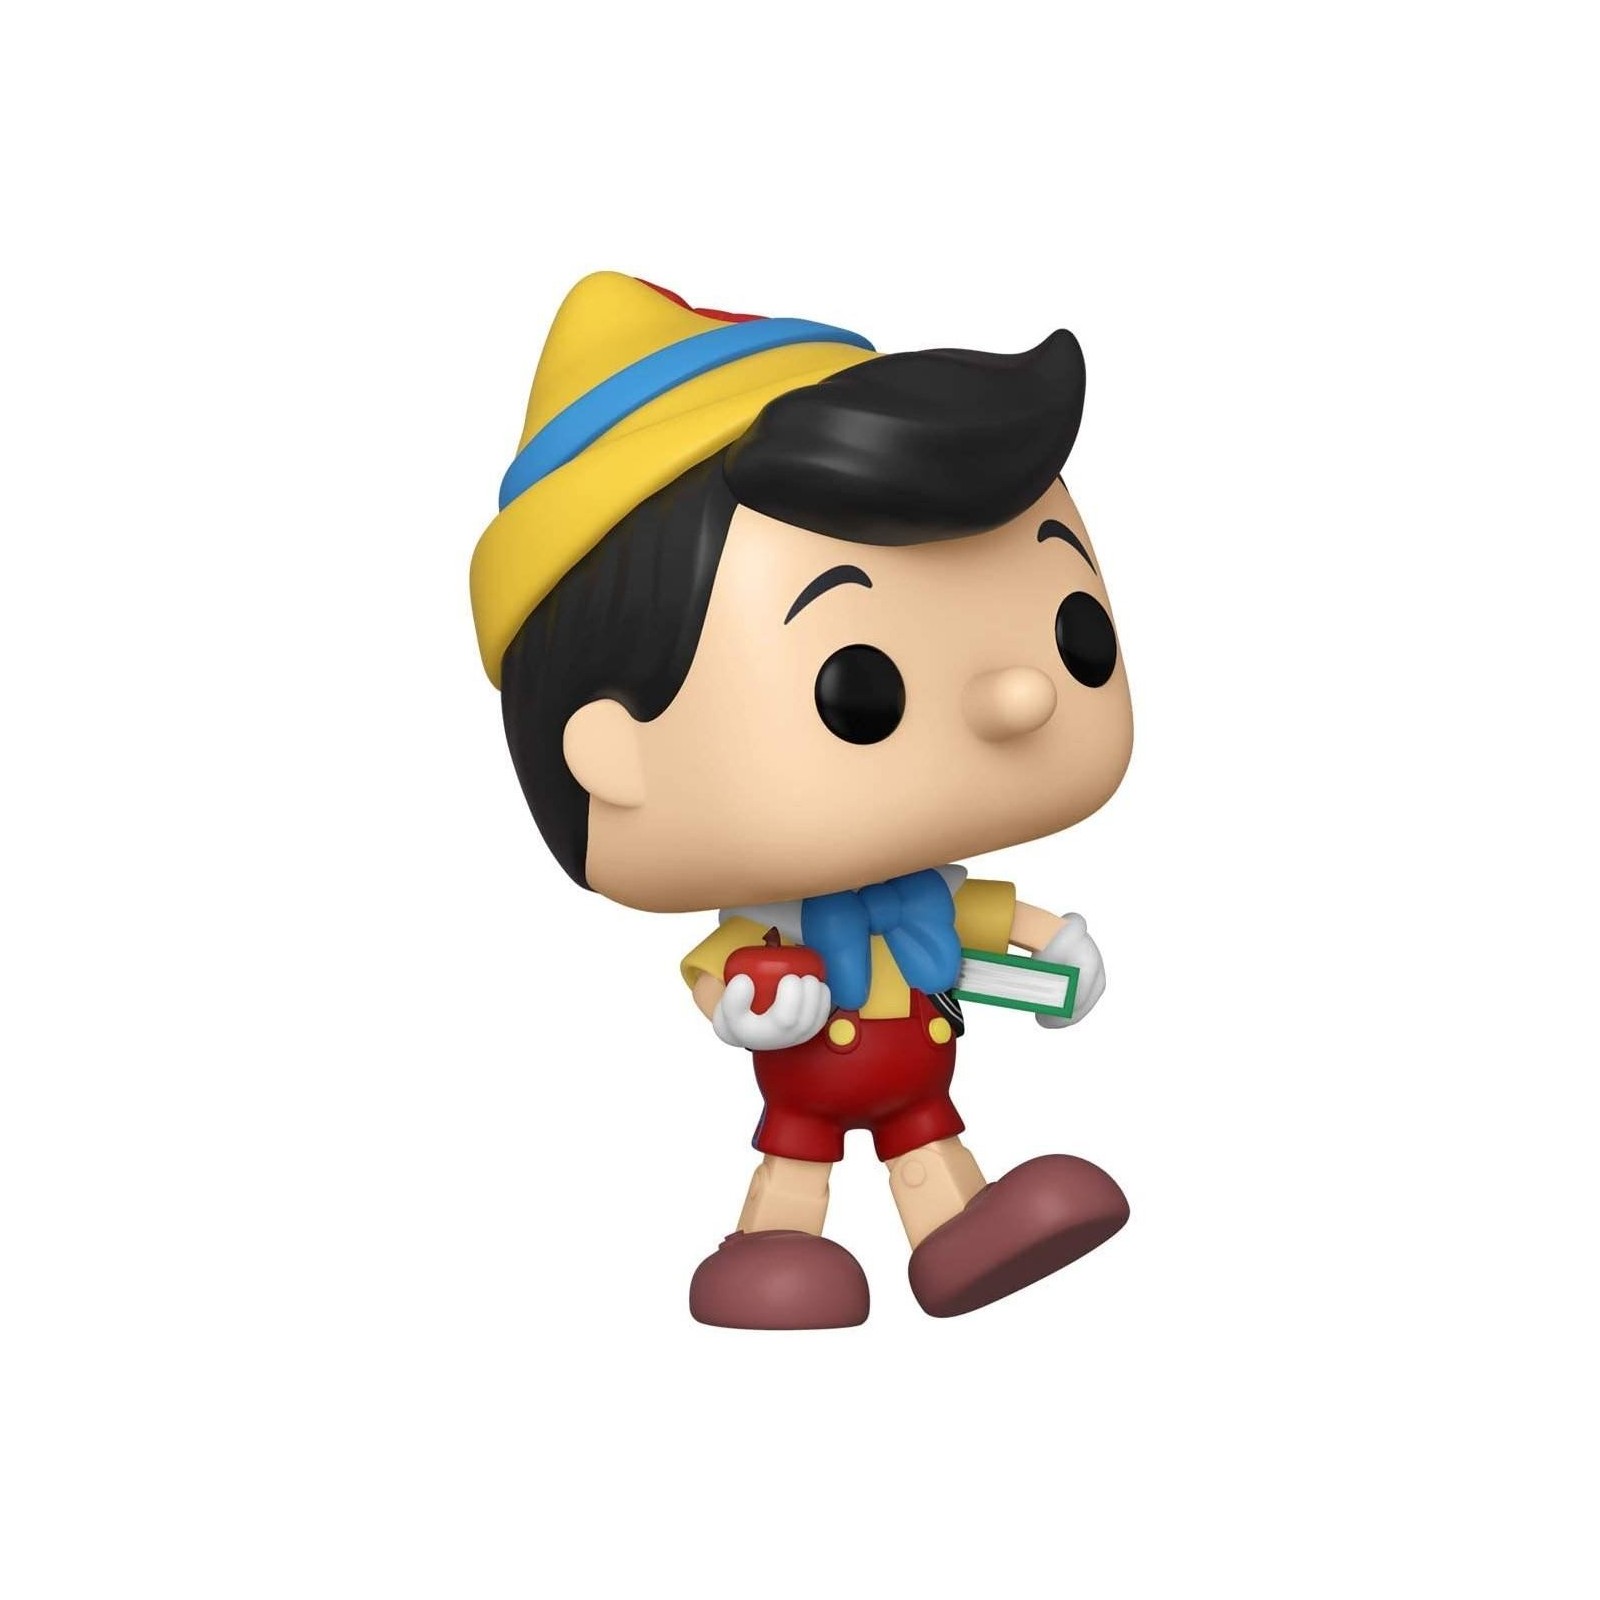 Figura Funko Pop Disney (Pinocchio) Pinocchio